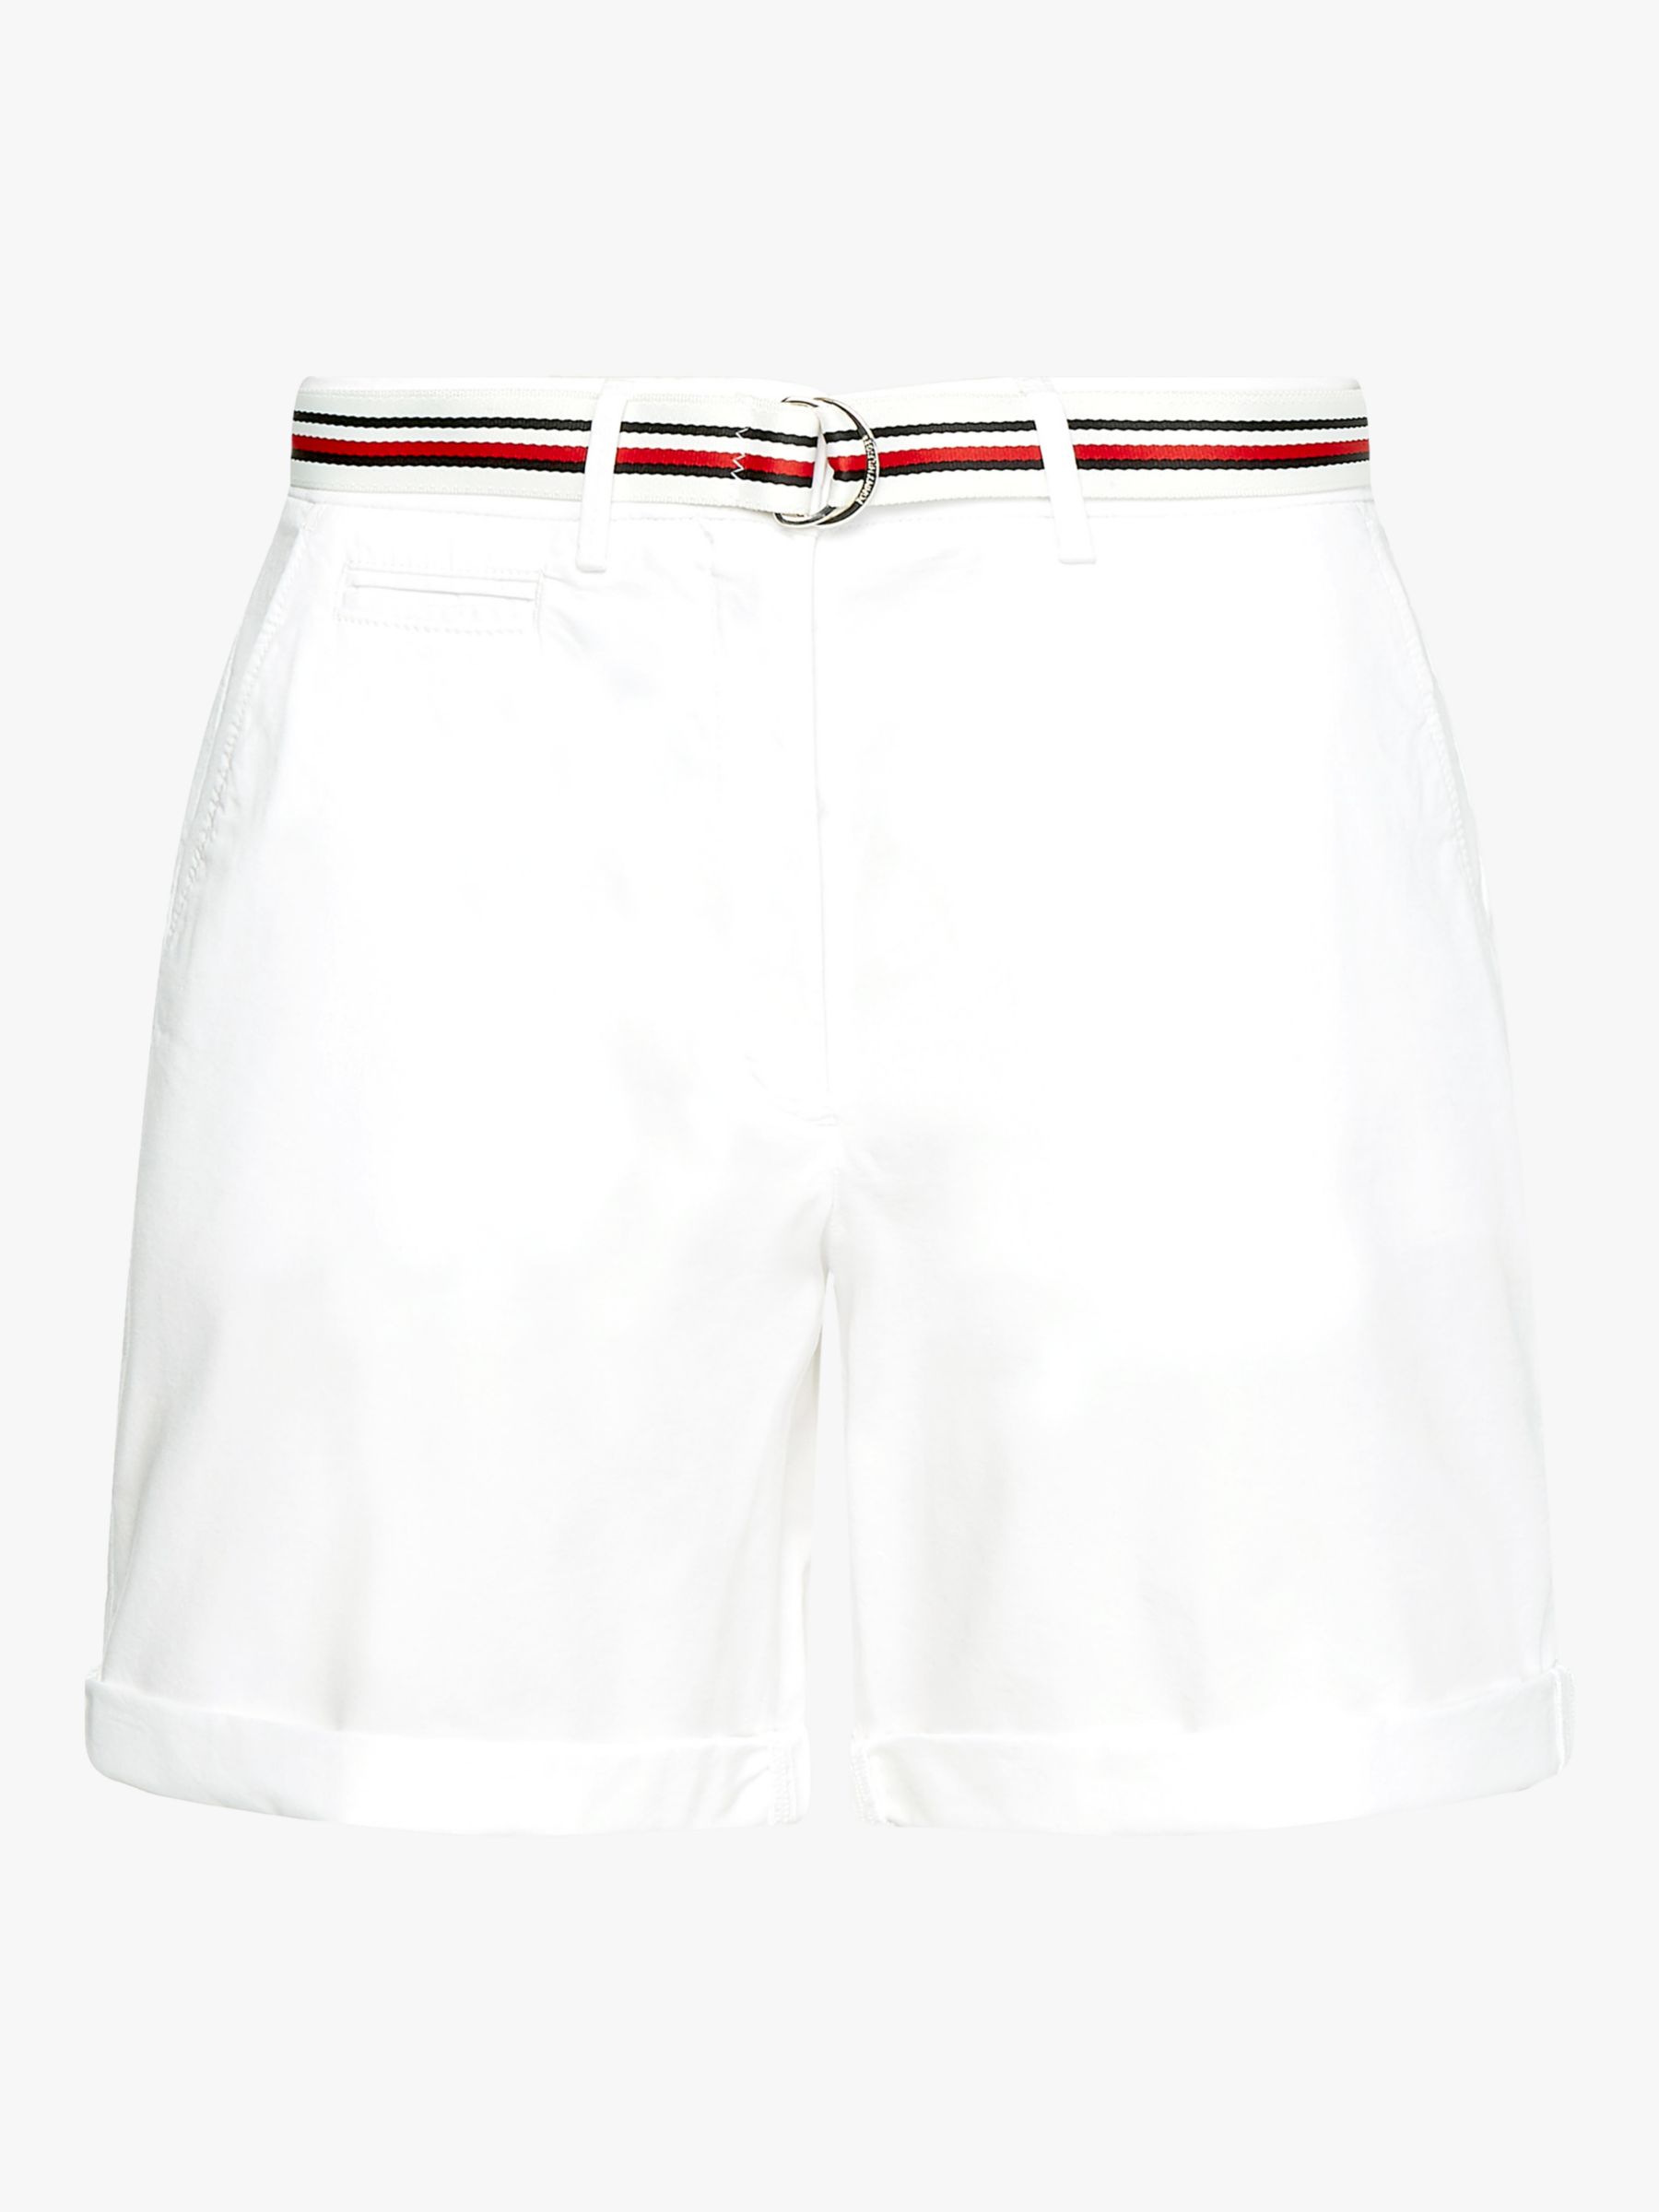 Tommy Hilfiger Mid Rise Chino Shorts, Optic White, 8